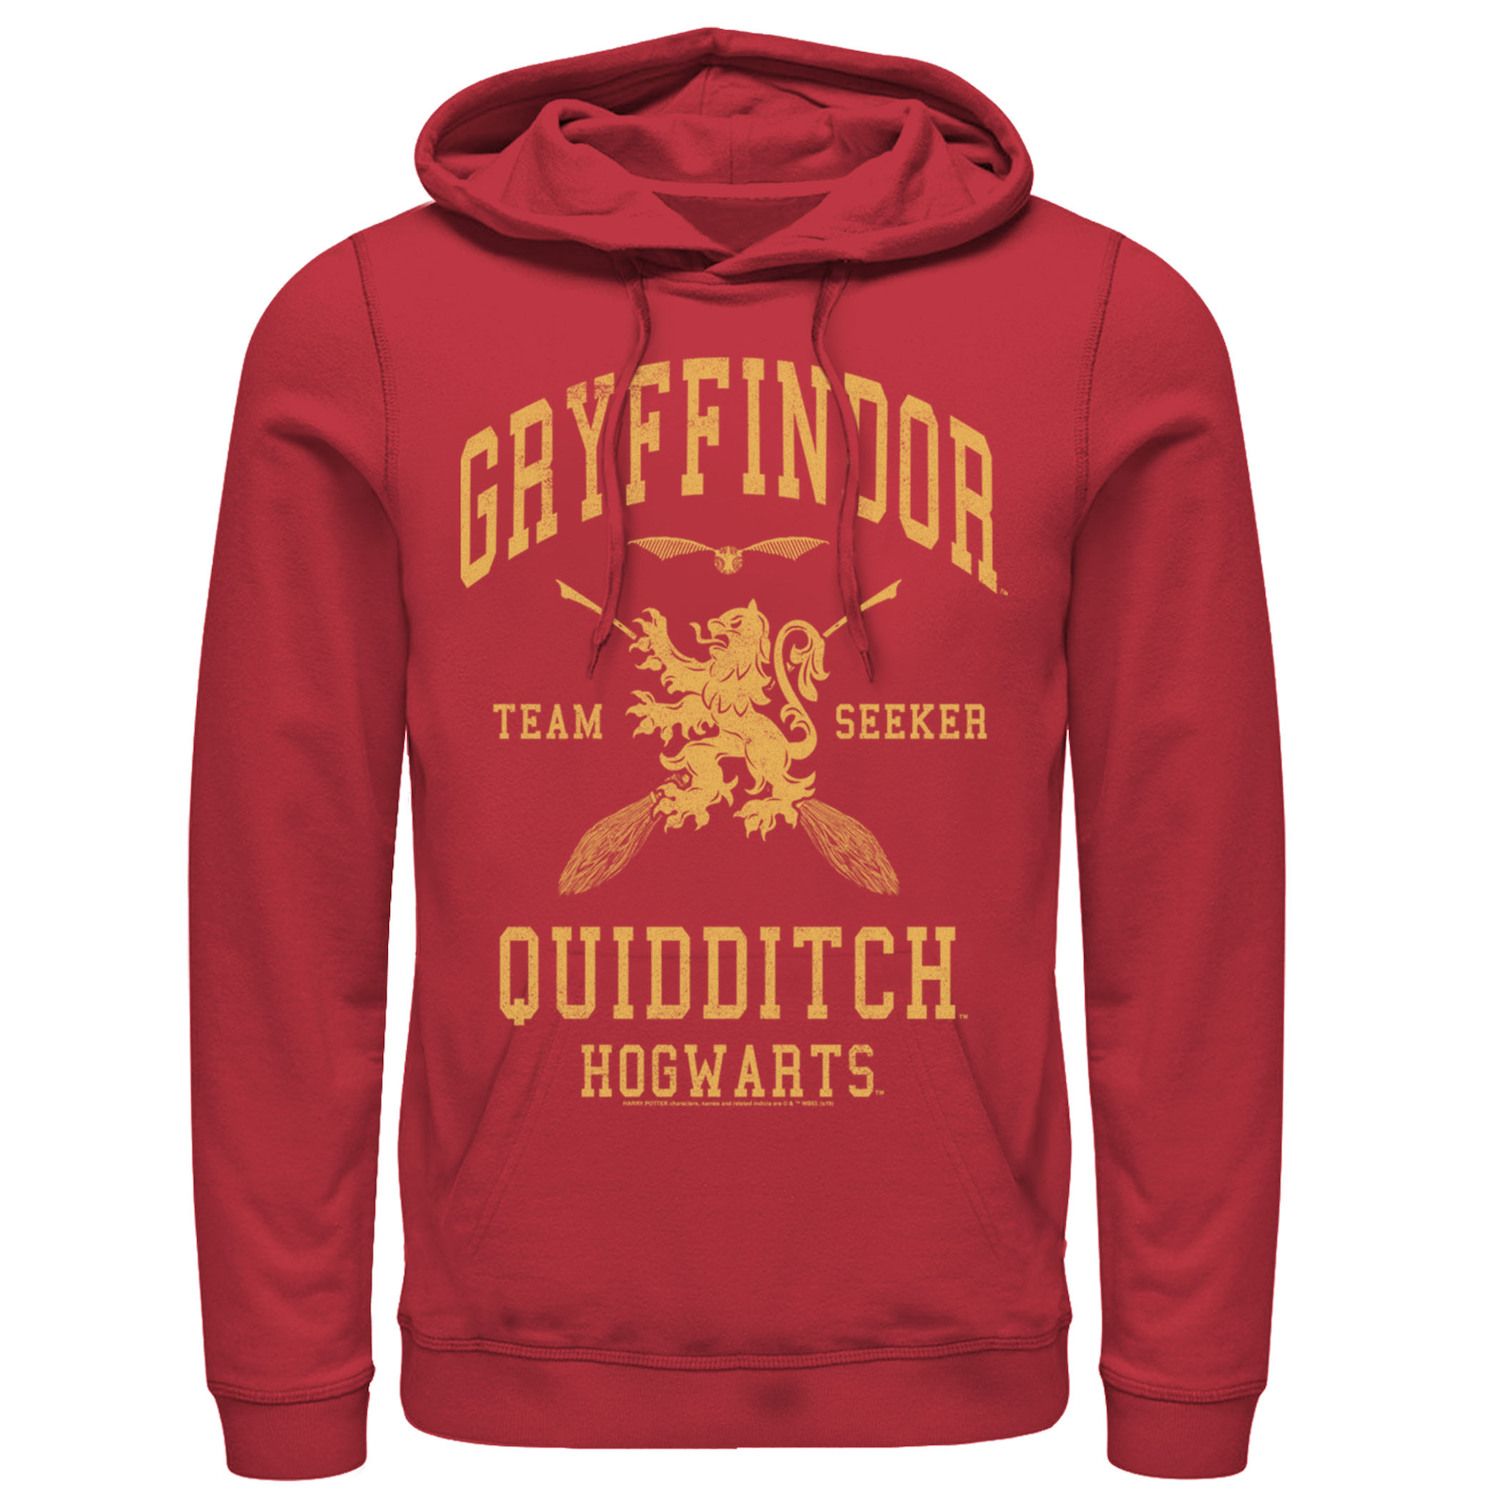 Image for Harry Potter Men's Gryffindor Quidditch Team Seeker Hoodie at Kohl's.